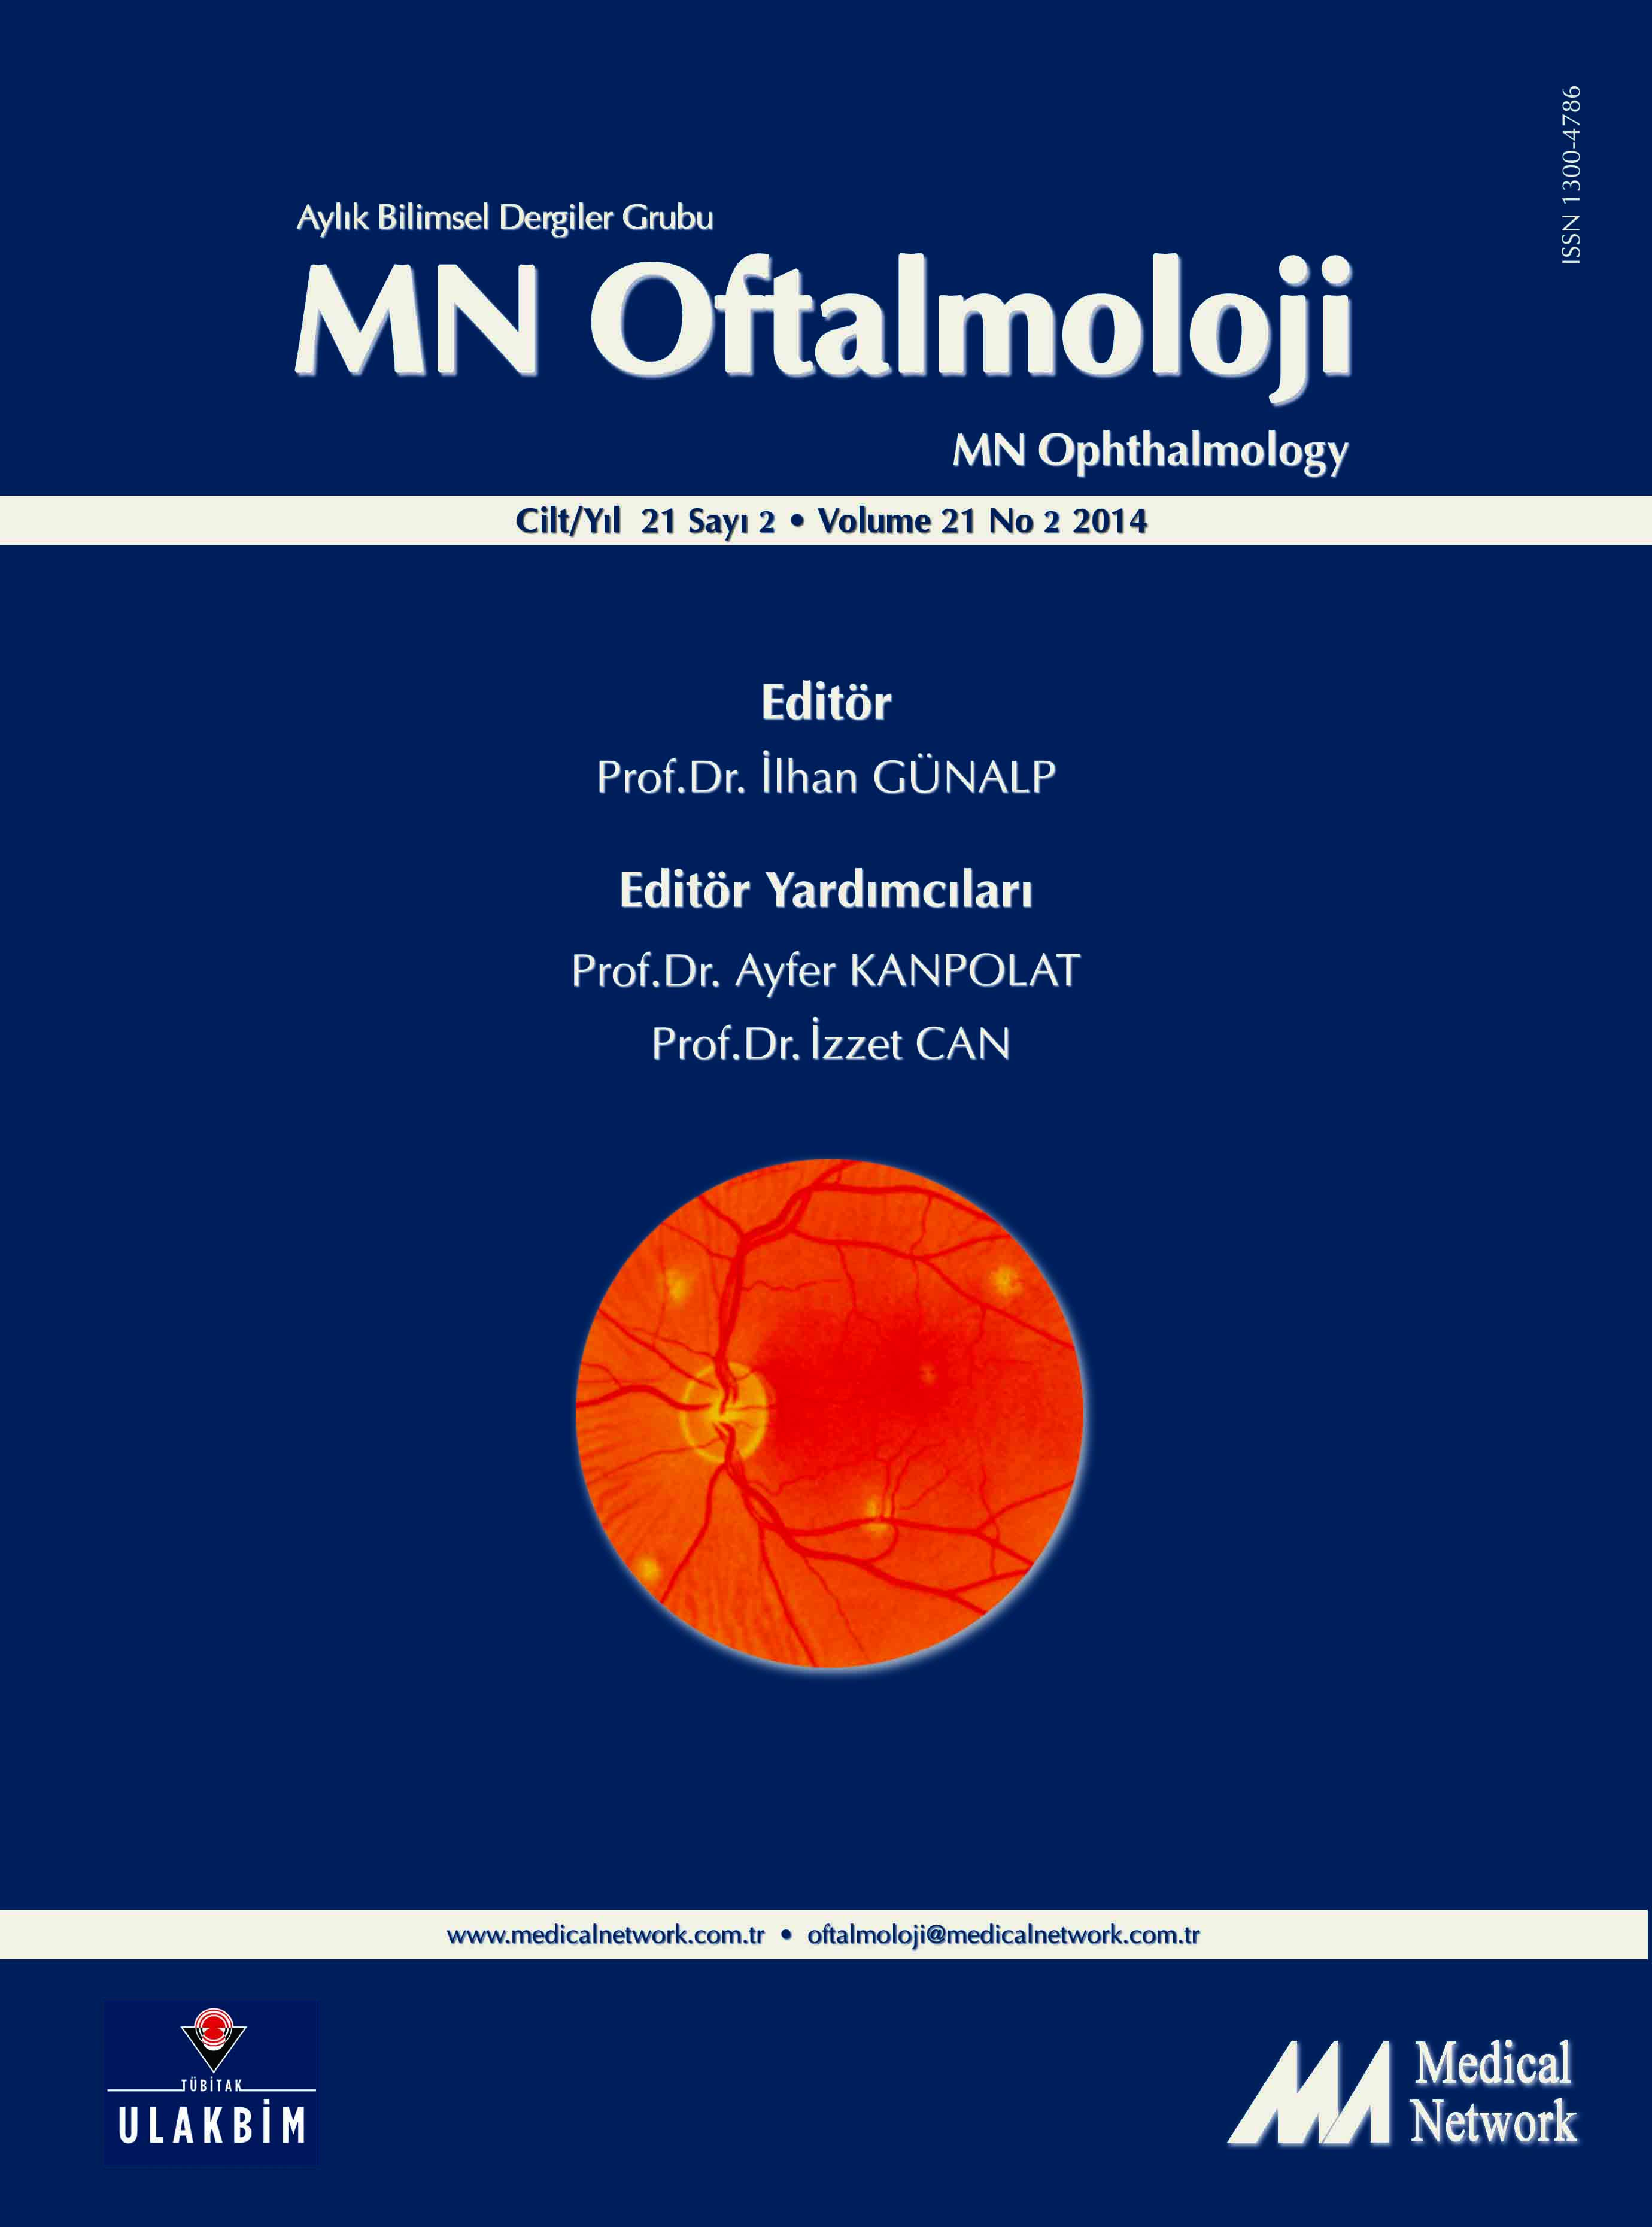 <p>MN Oftalmoloji Cilt: 21 Say: 2 2014 (MN Ophthalmology Volume: 21 No 2 2014)</p>